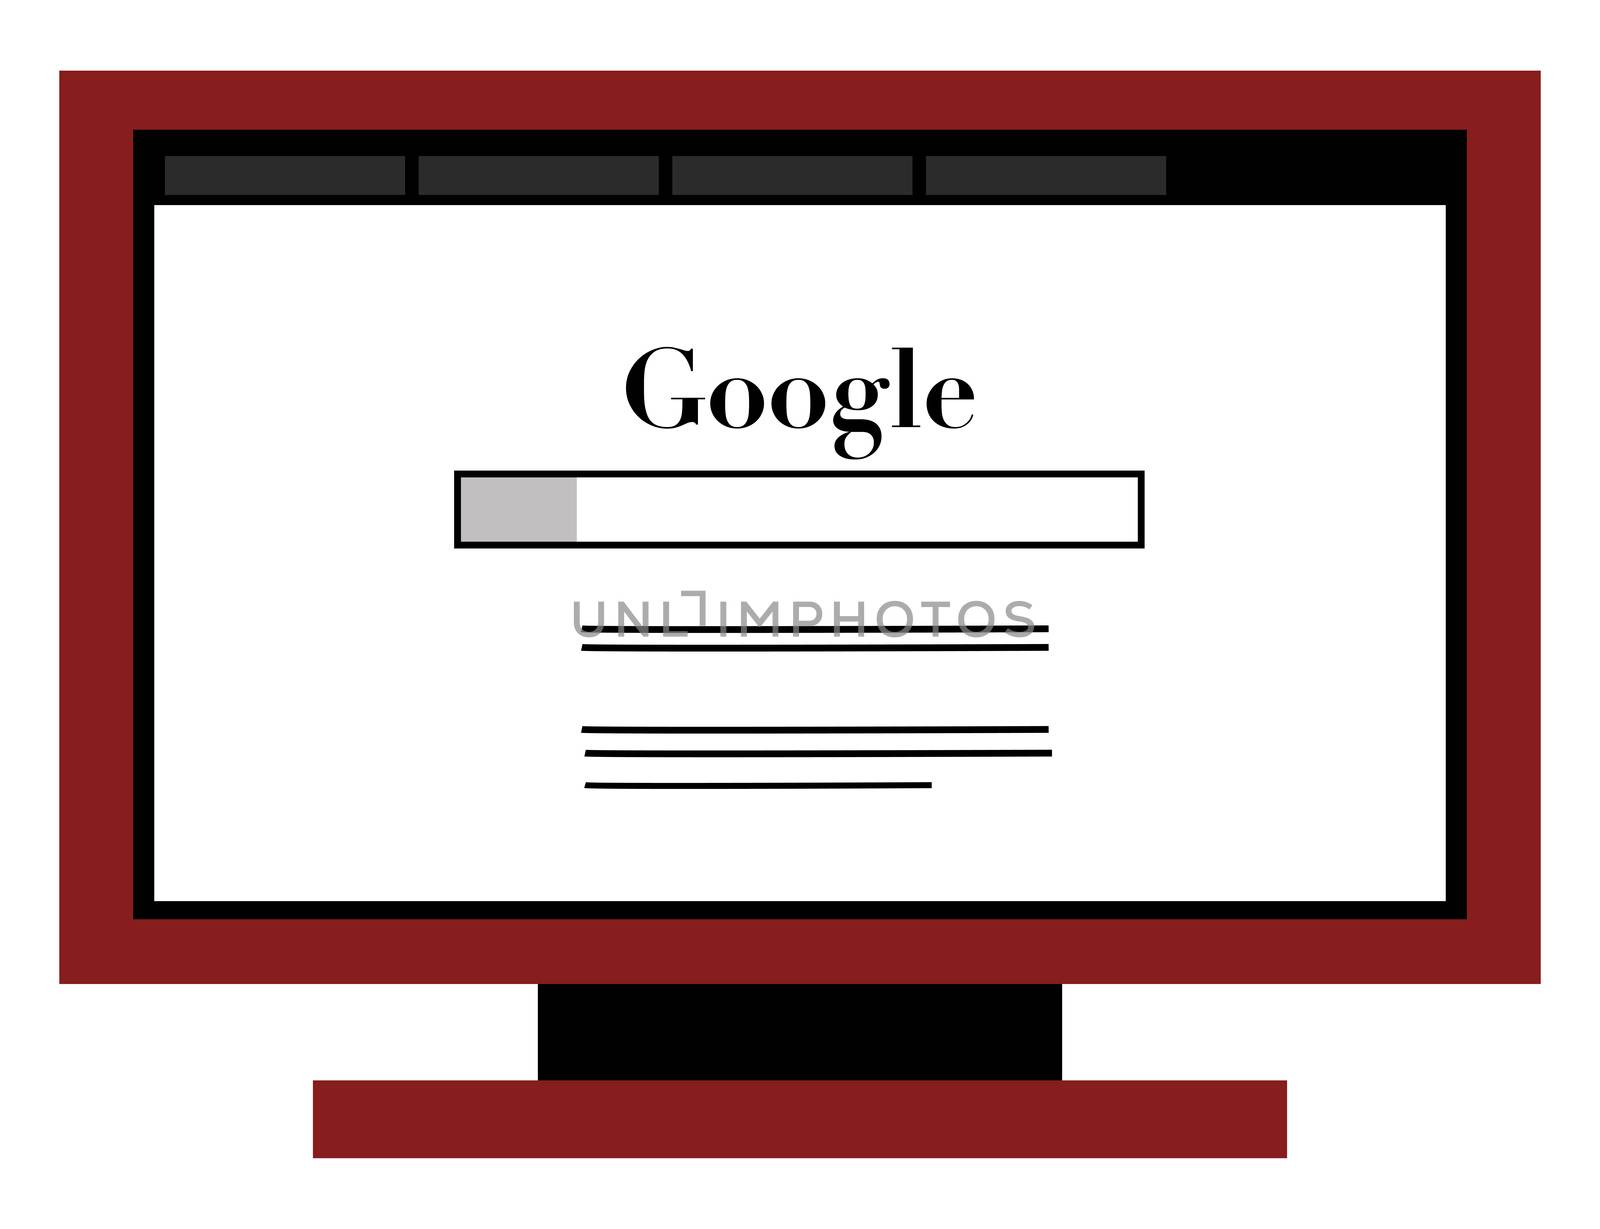 Google internet site, illustration, vector on white background